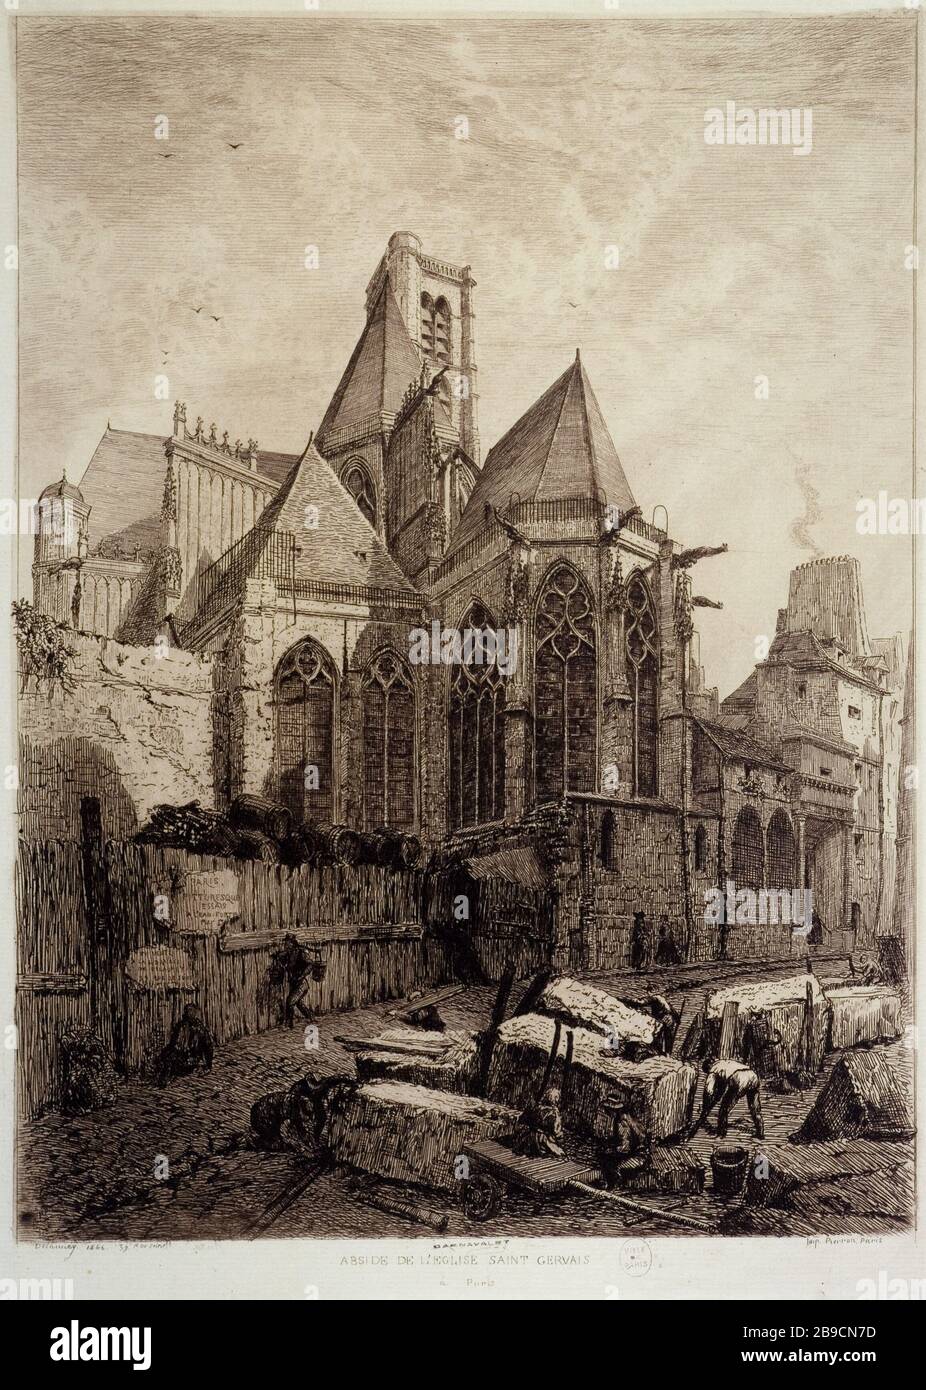 ABSIDE DELLA CHIESA DI SAINT-GERVAIS Alfred-Alexandre Delauney. 'Abside de l'église Saint-Gervais, 1866'. Gravure. Parigi, musée Carnavalet. Foto Stock